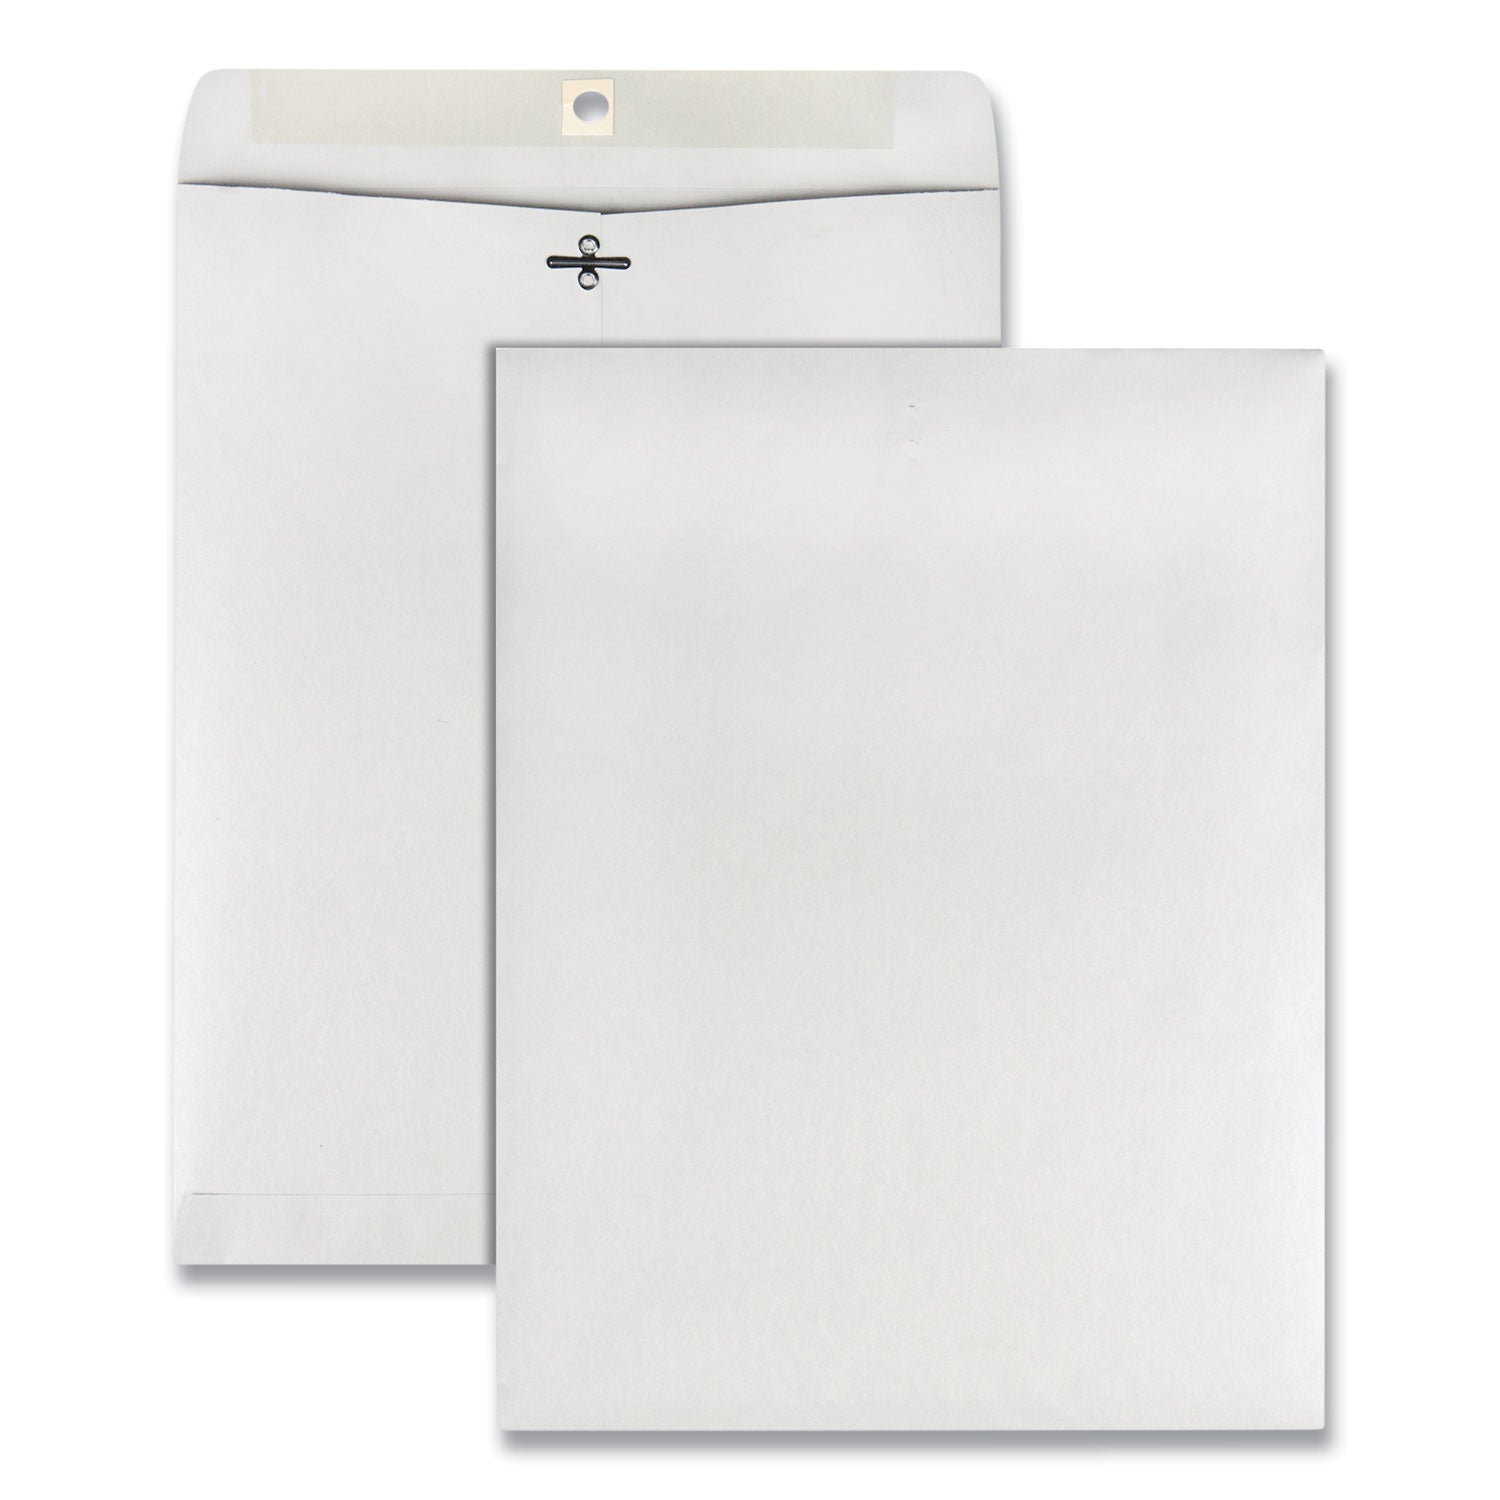 Clasp Envelope, 28 lb Bond Weight Paper, #97, Square Flap, Clasp/Gummed Closure, 10 x 13, White, 100/Box - 